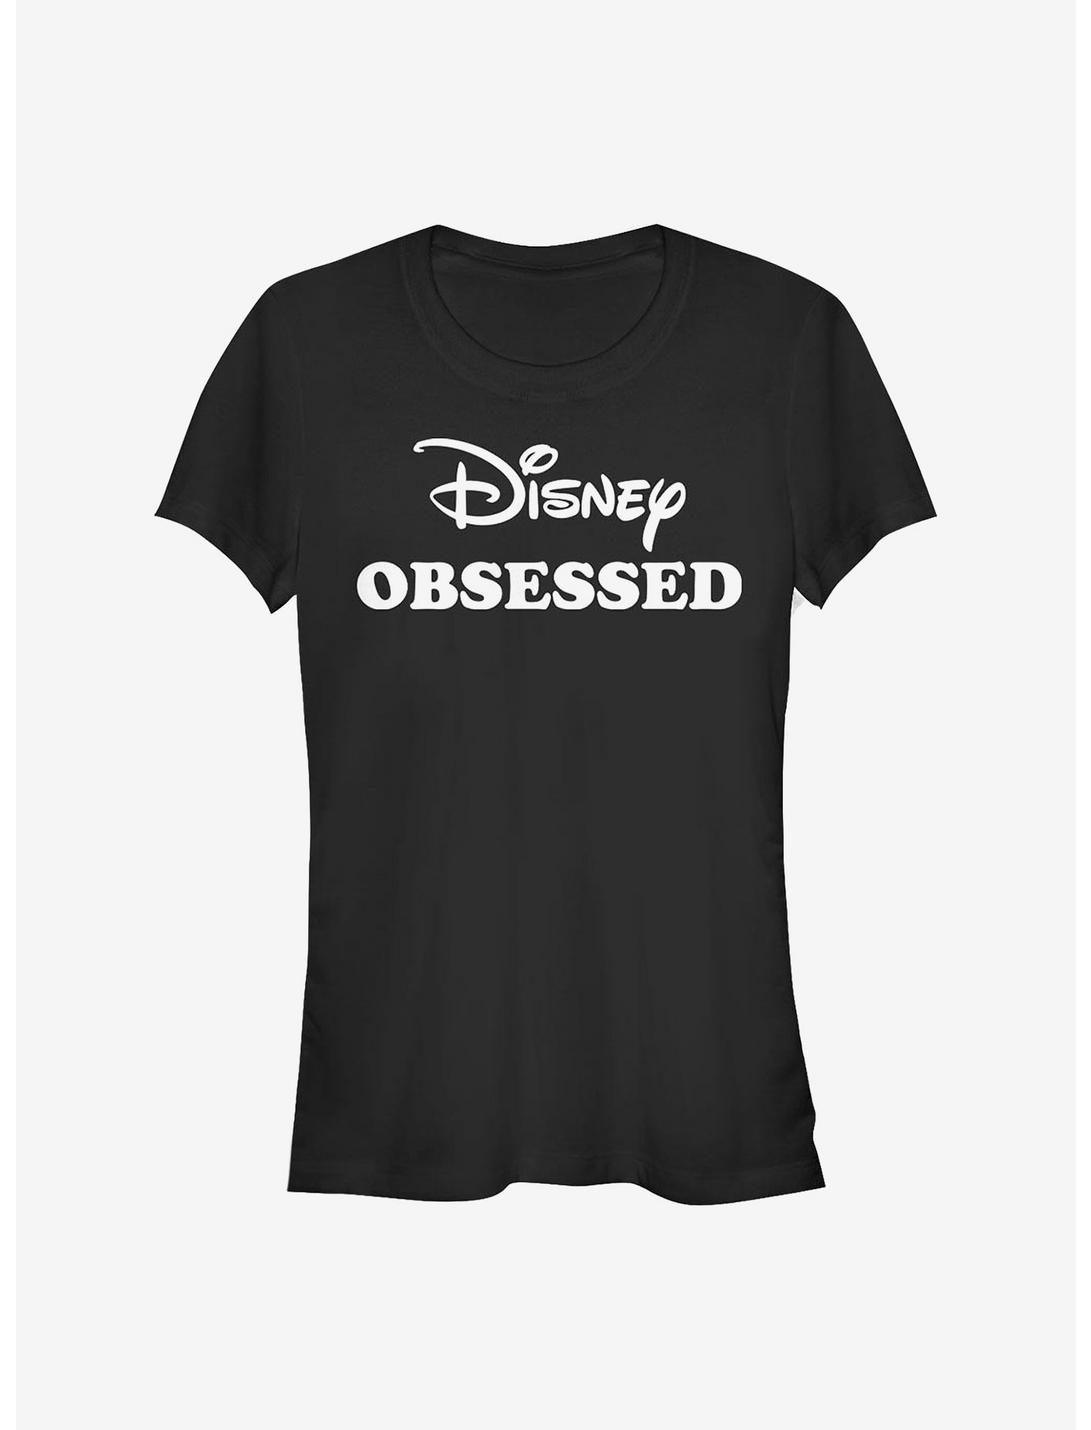 Disney Channel Obsessed Girls T-Shirt, BLACK, hi-res